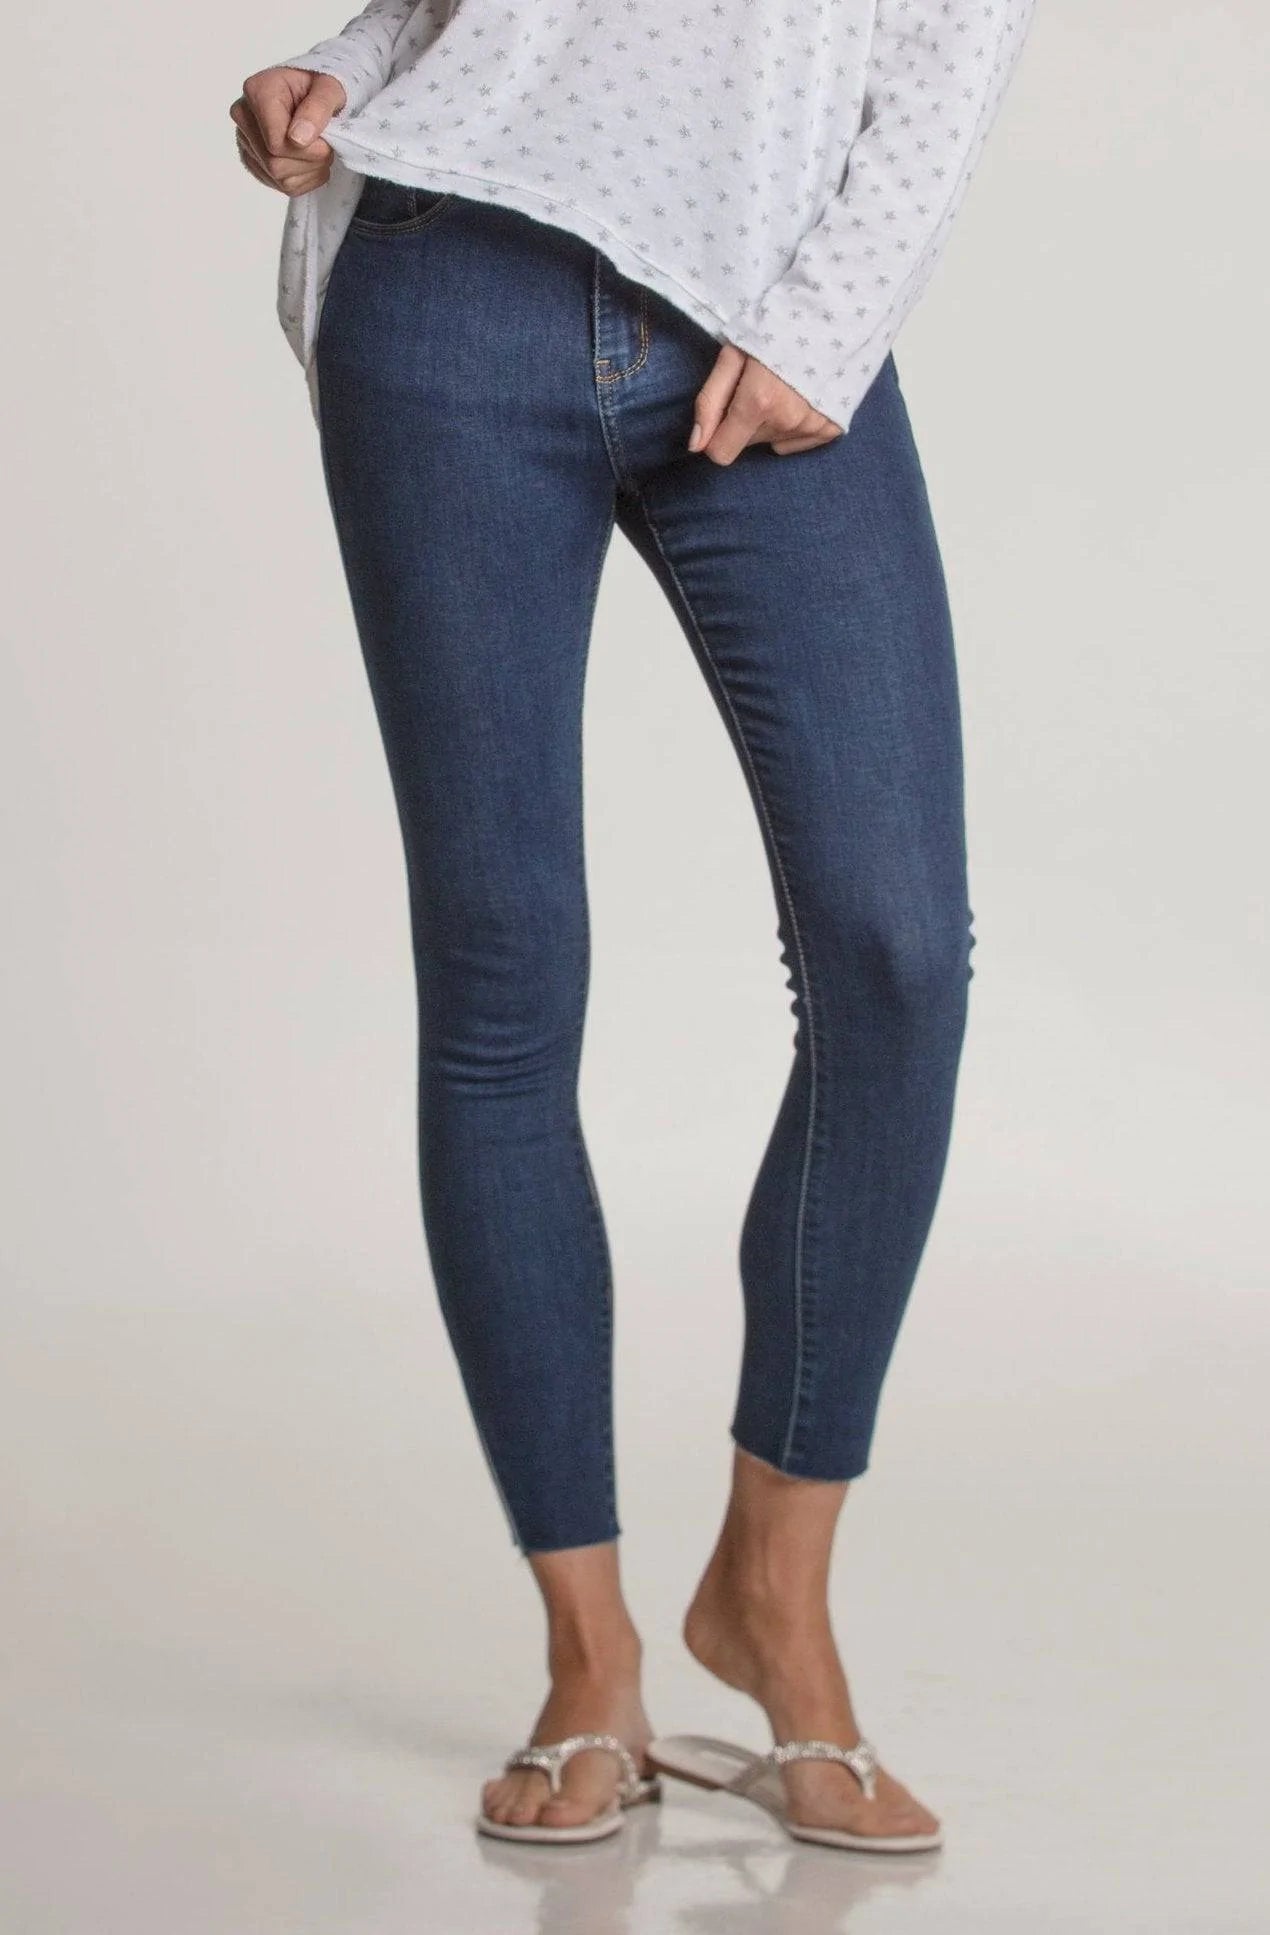 Denim Super Skinny Jeans for sale - Woodcock and Cavendish